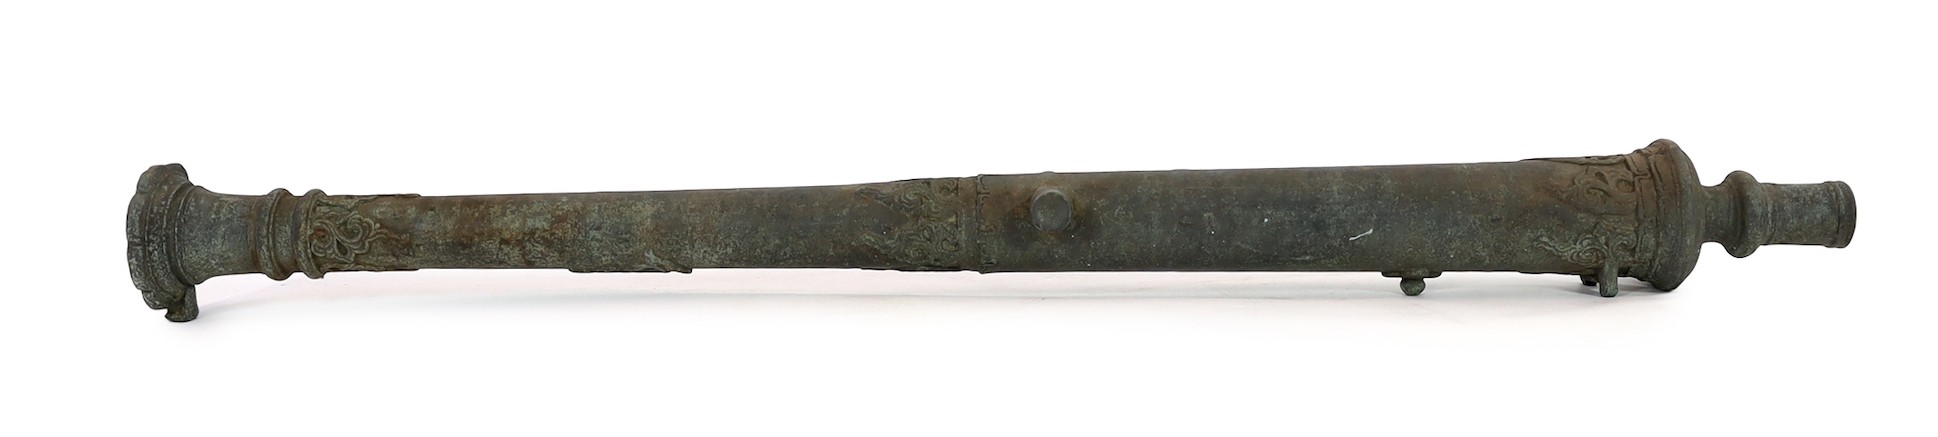 An 18th century Indonesian bronze Lantaka cannon, 125cm long                                                                                                                                                                